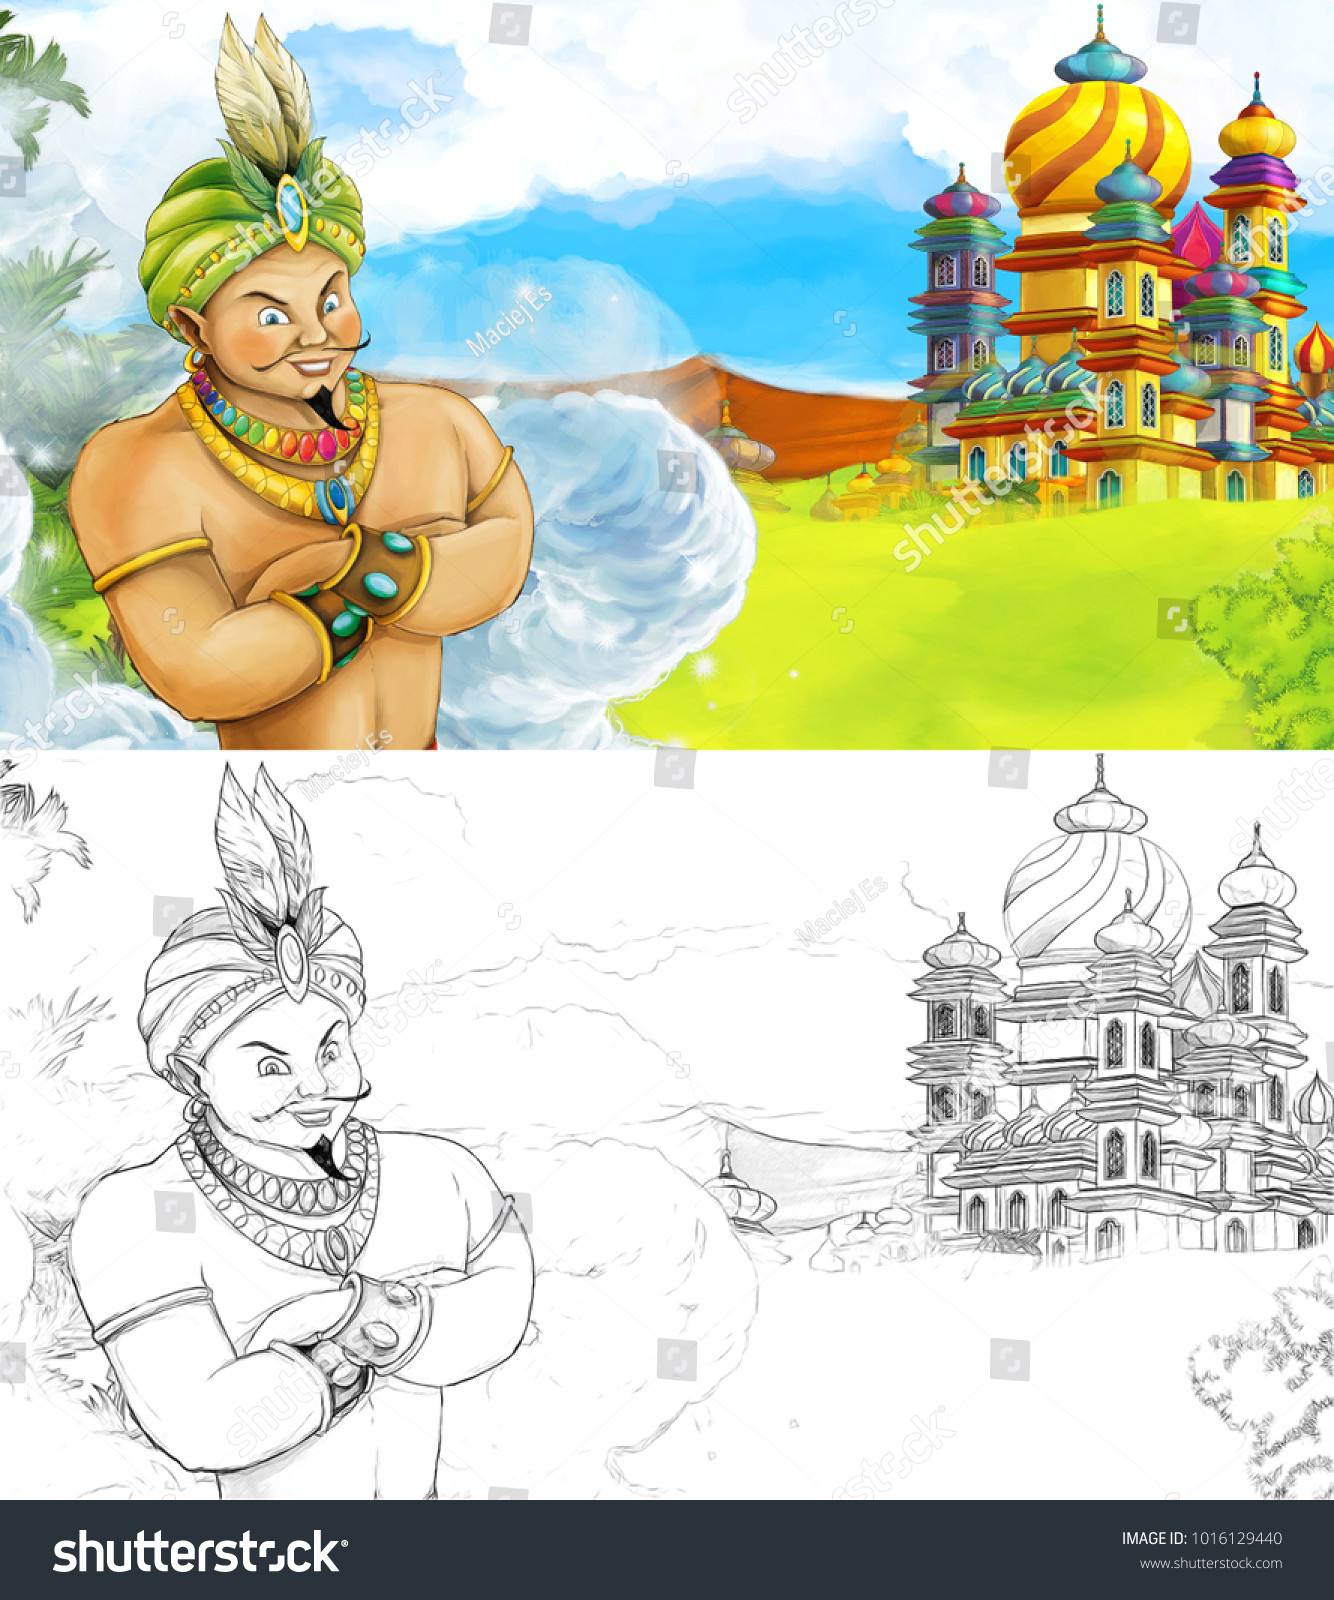 Drawing Cartoons In Motion Cartoon Scene Happy King Od Prince Stock Illustration 1016129440